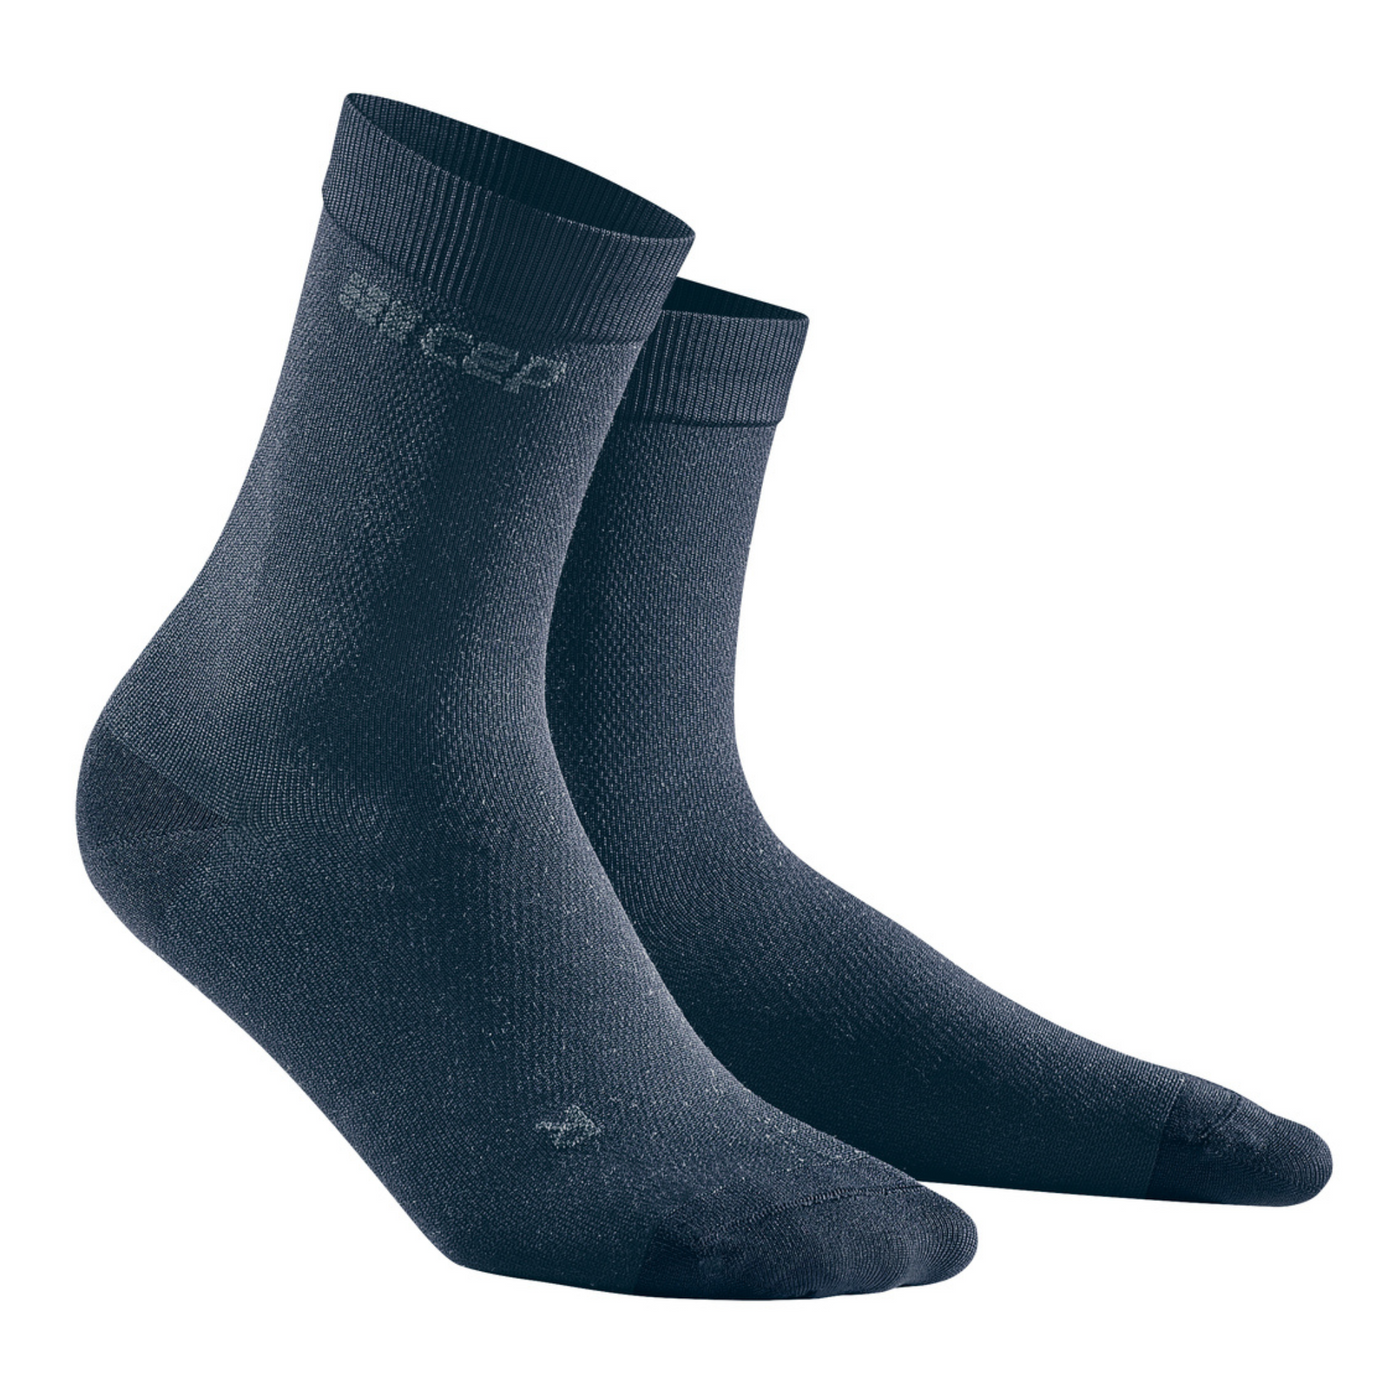 Allday Mid Cut Compression Socks, Men, Dark Blue, Side View